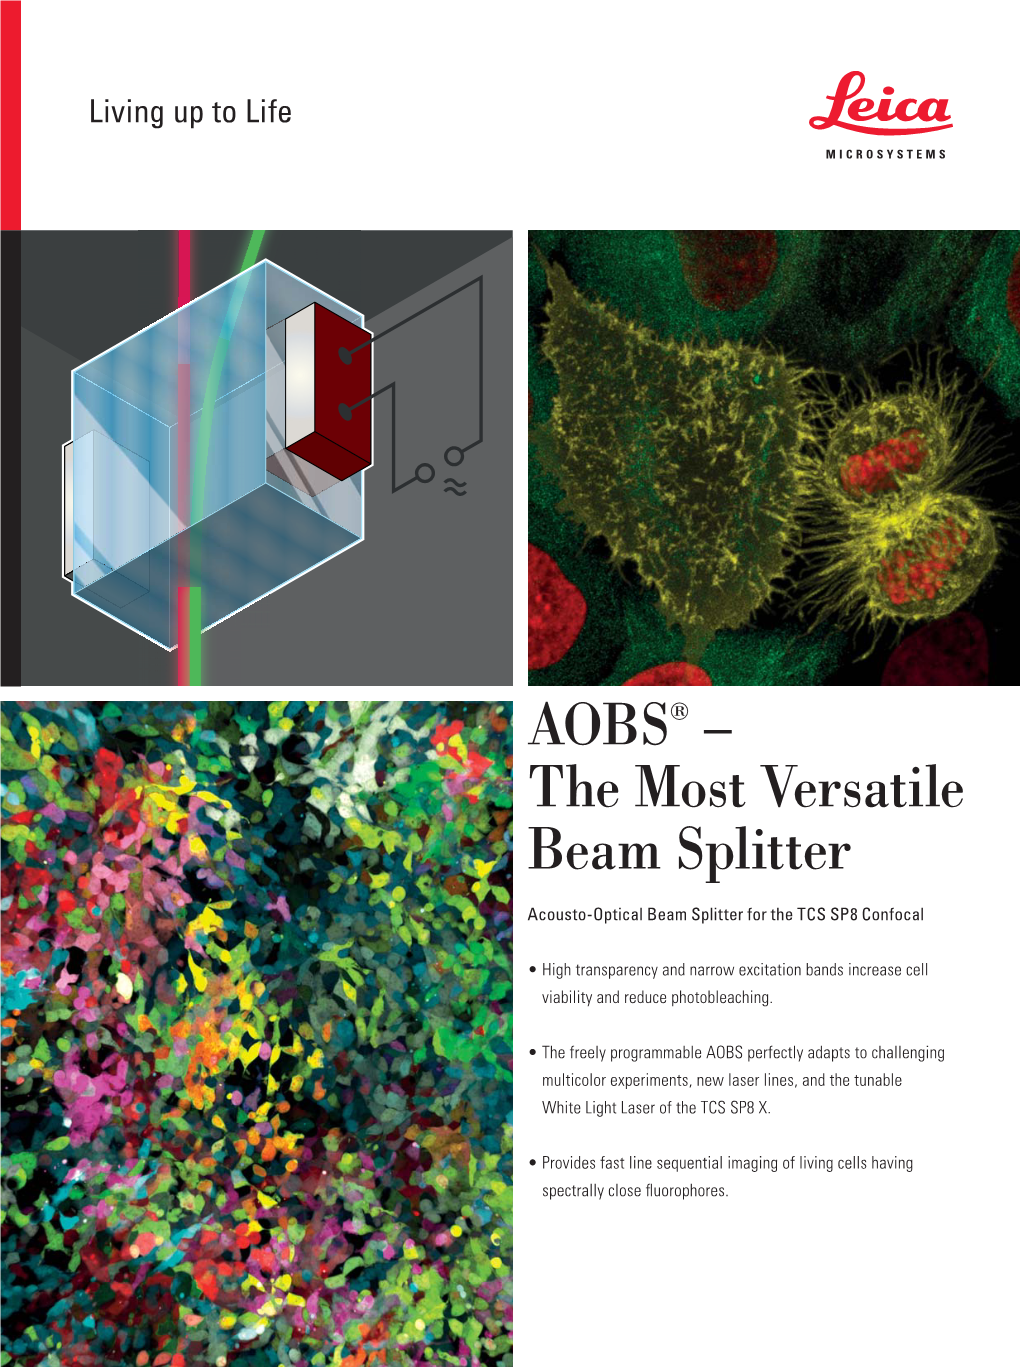 AOBS® – the Most Versatile Beam Splitter